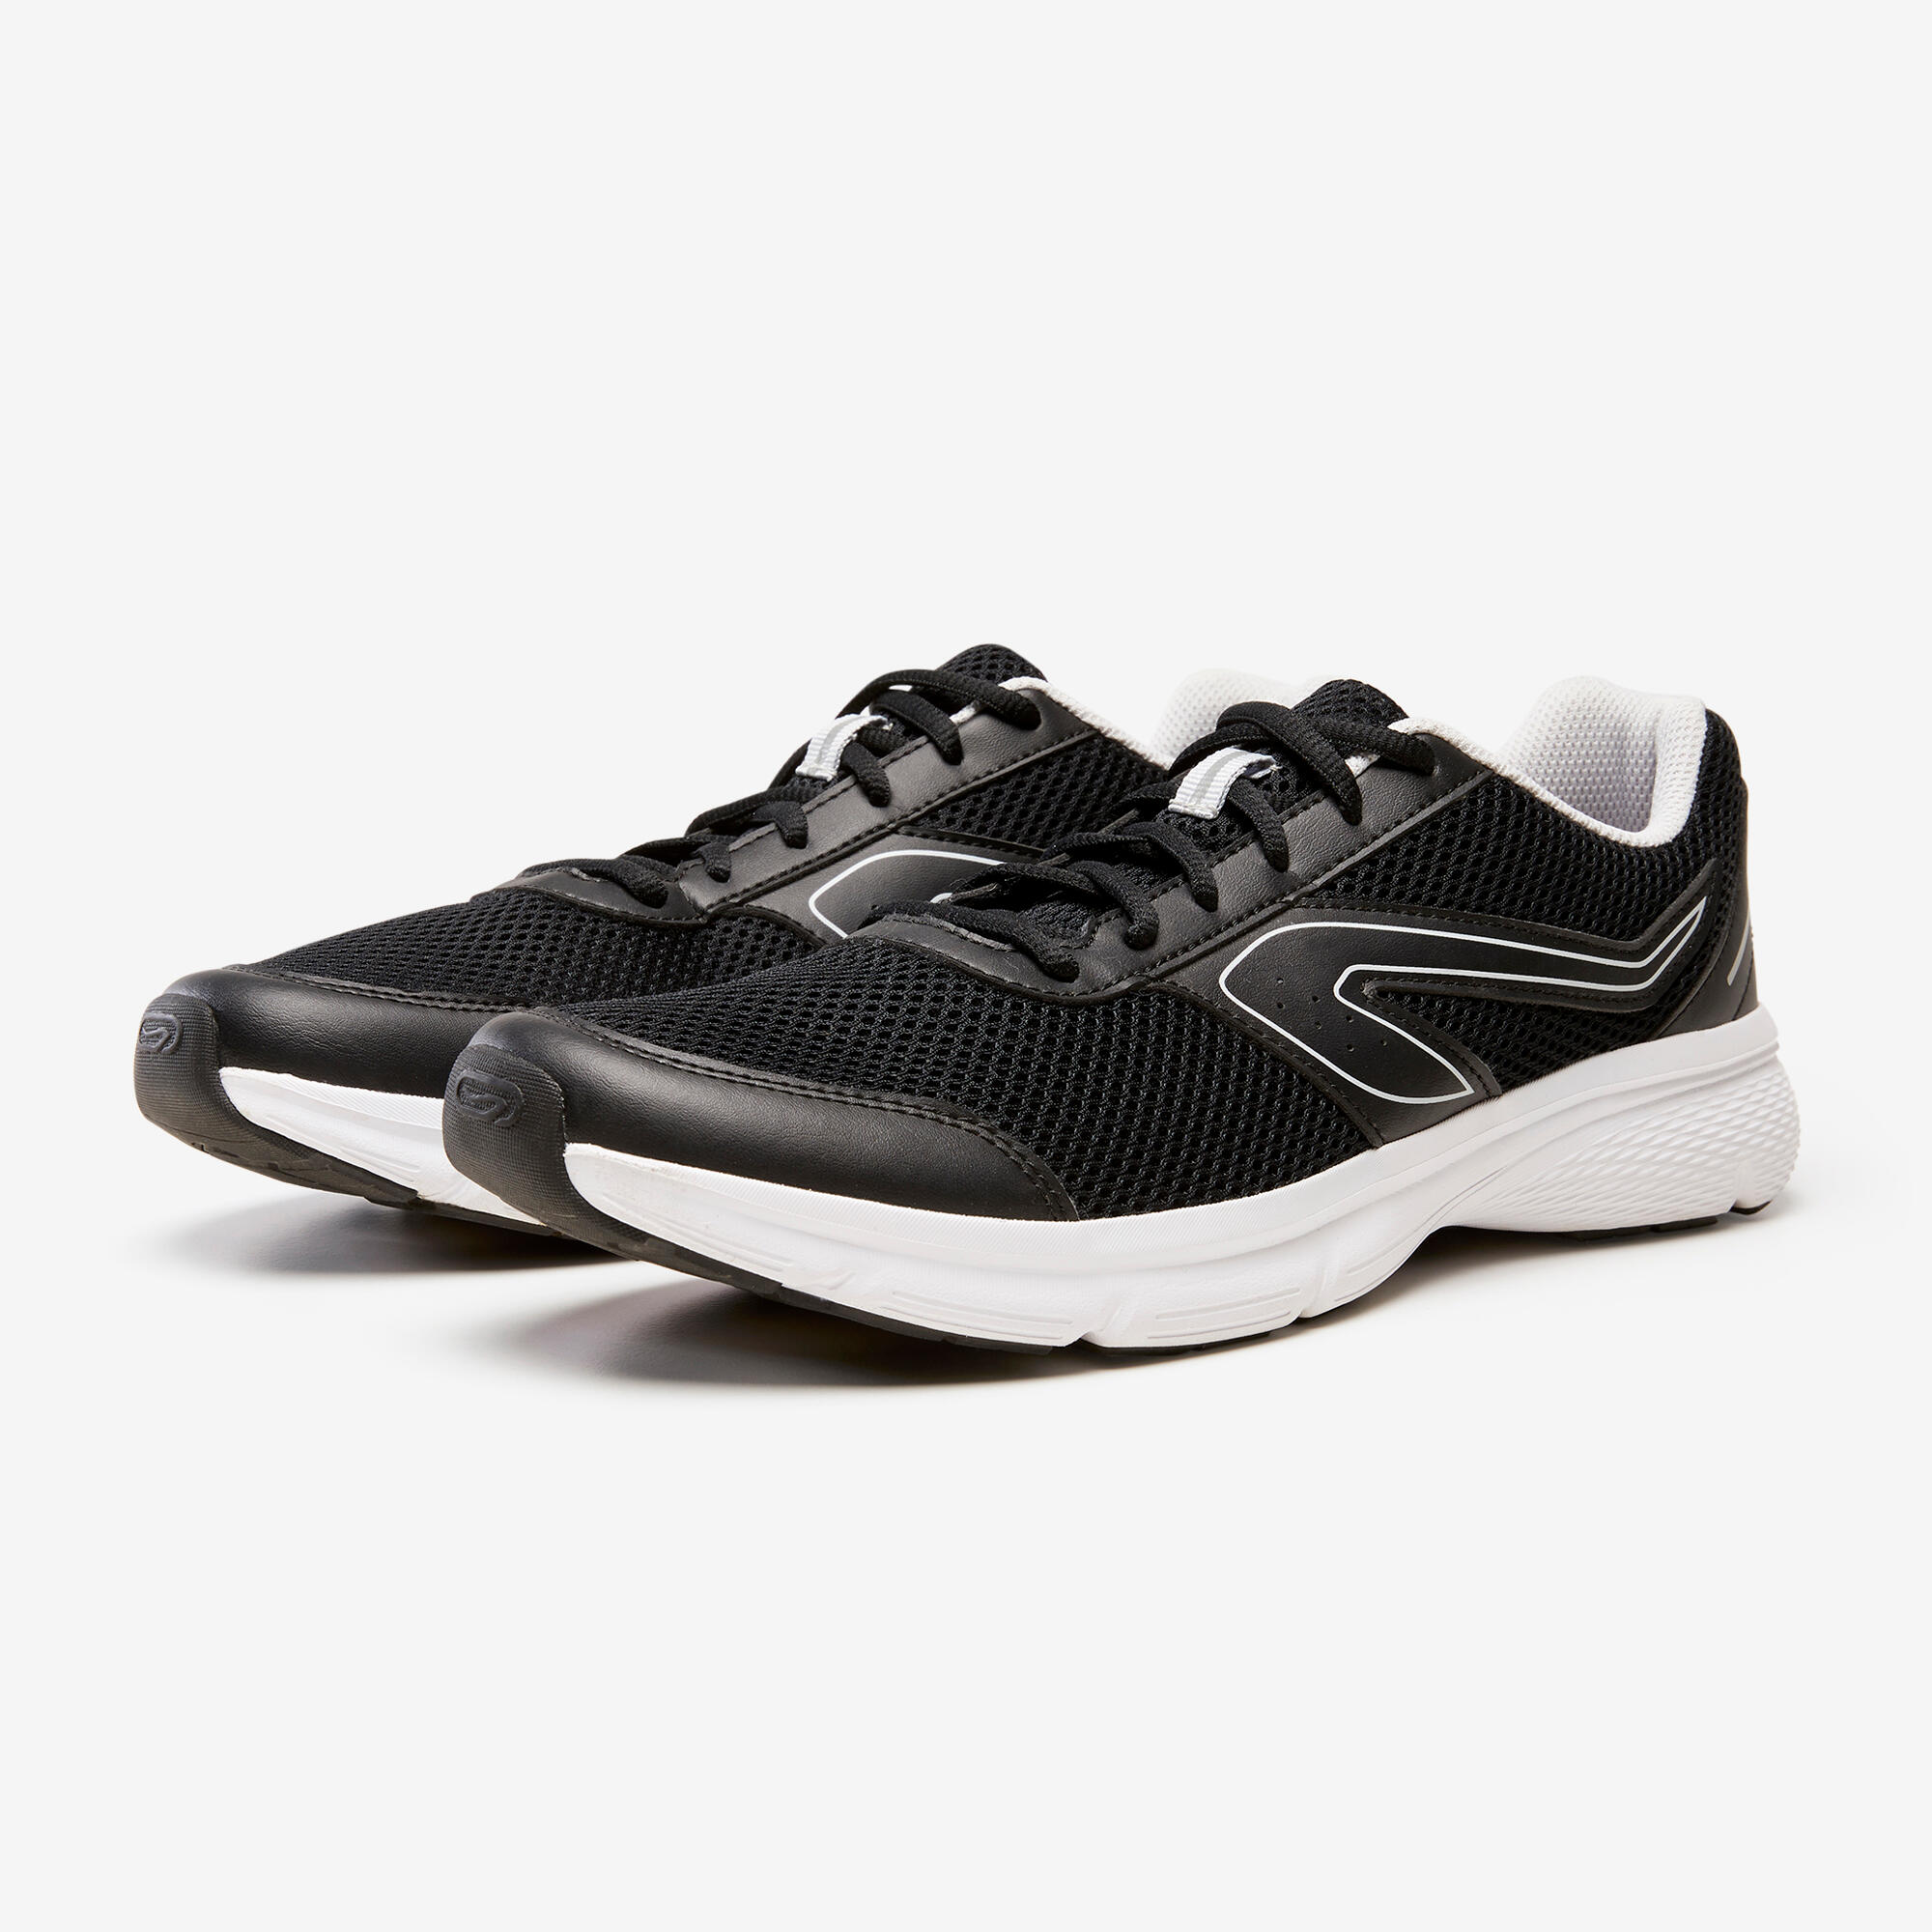 Men's Running Shoes - Run Active Black/Grey - black - Kalenji - Decathlon